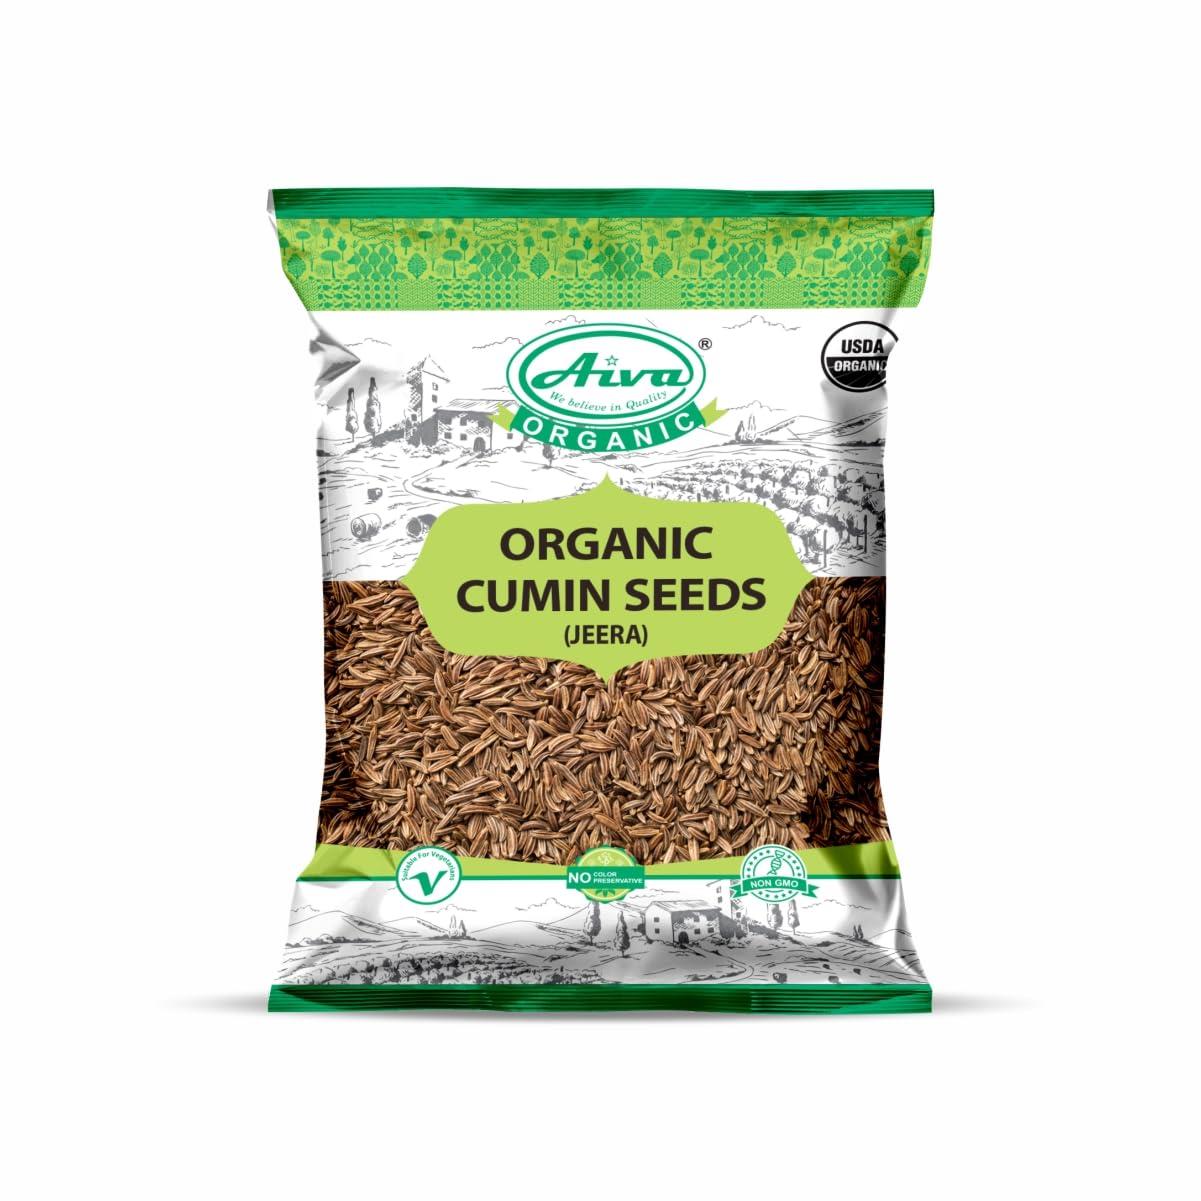 AIVA Organic Cumin Seeds (Jeera) 14 oz